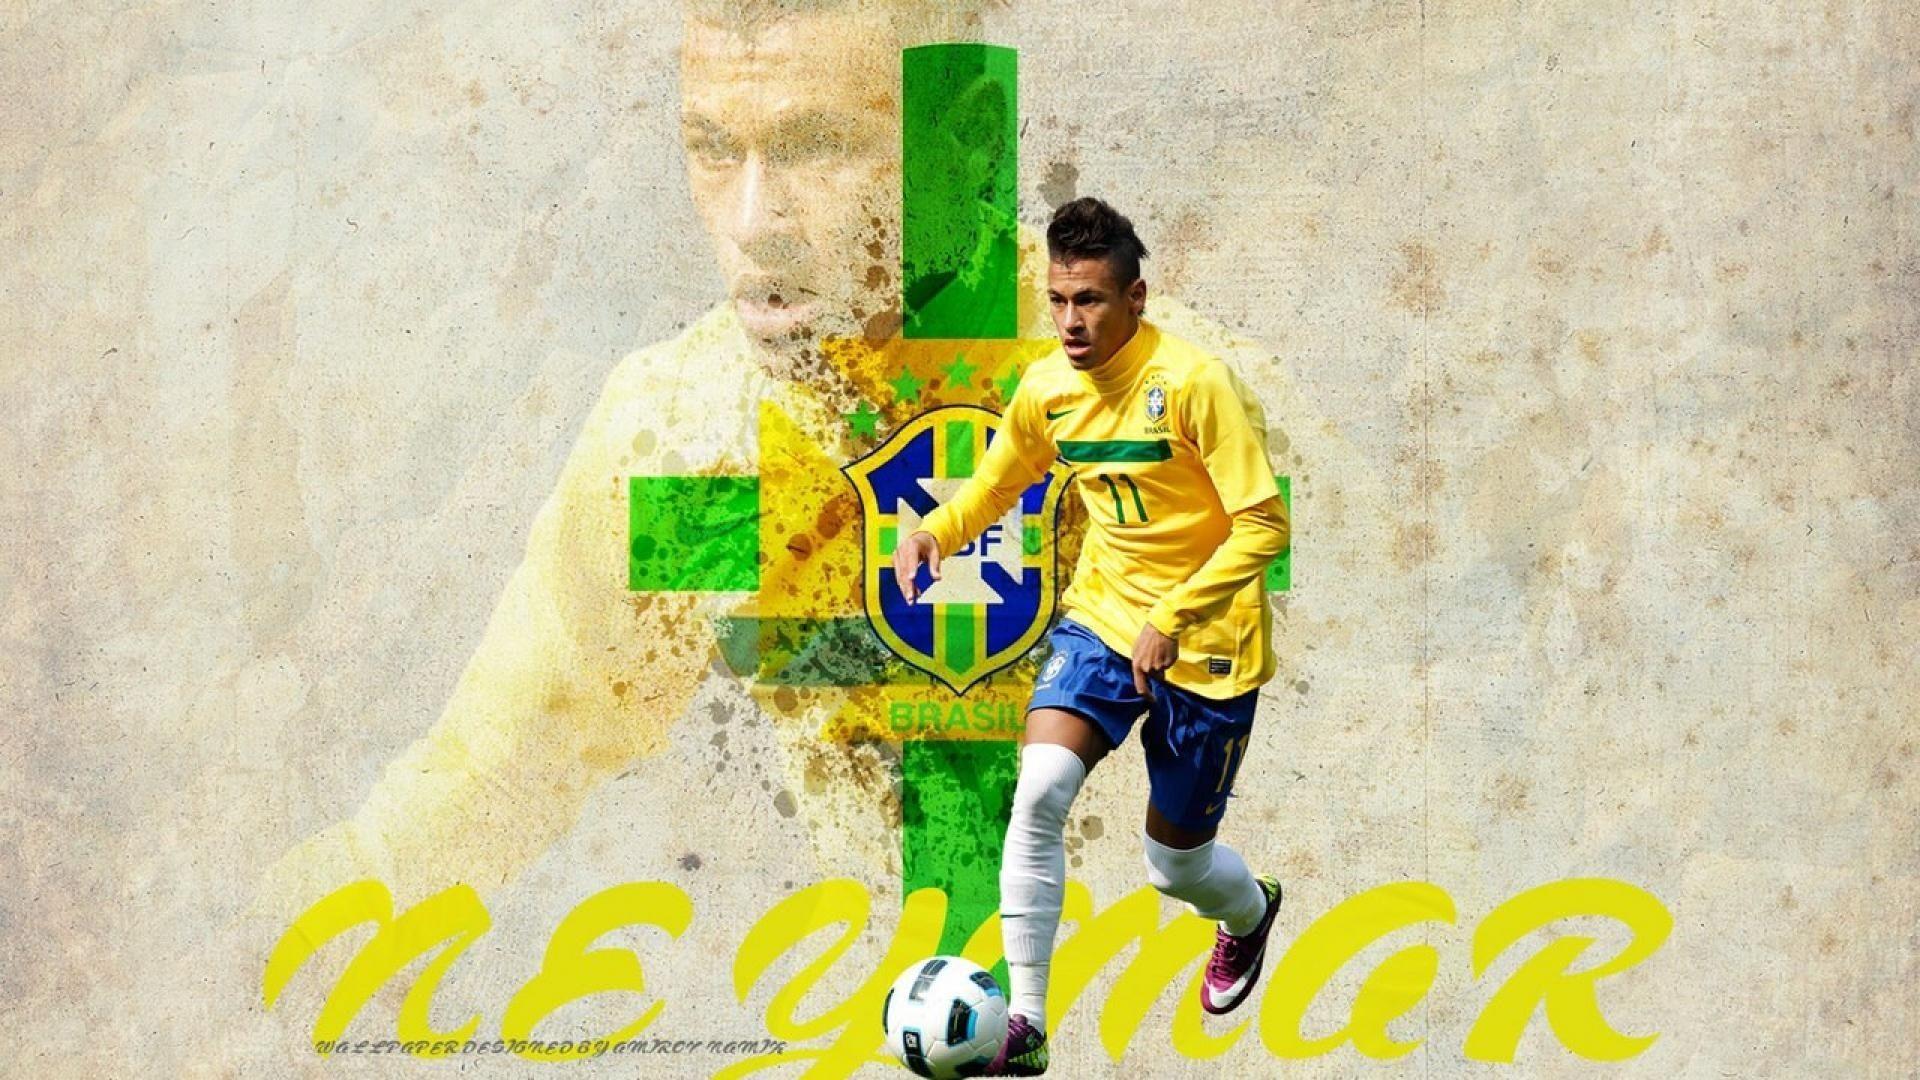 Best Neymar Jr Wallpaper Background. Free Download GameFree